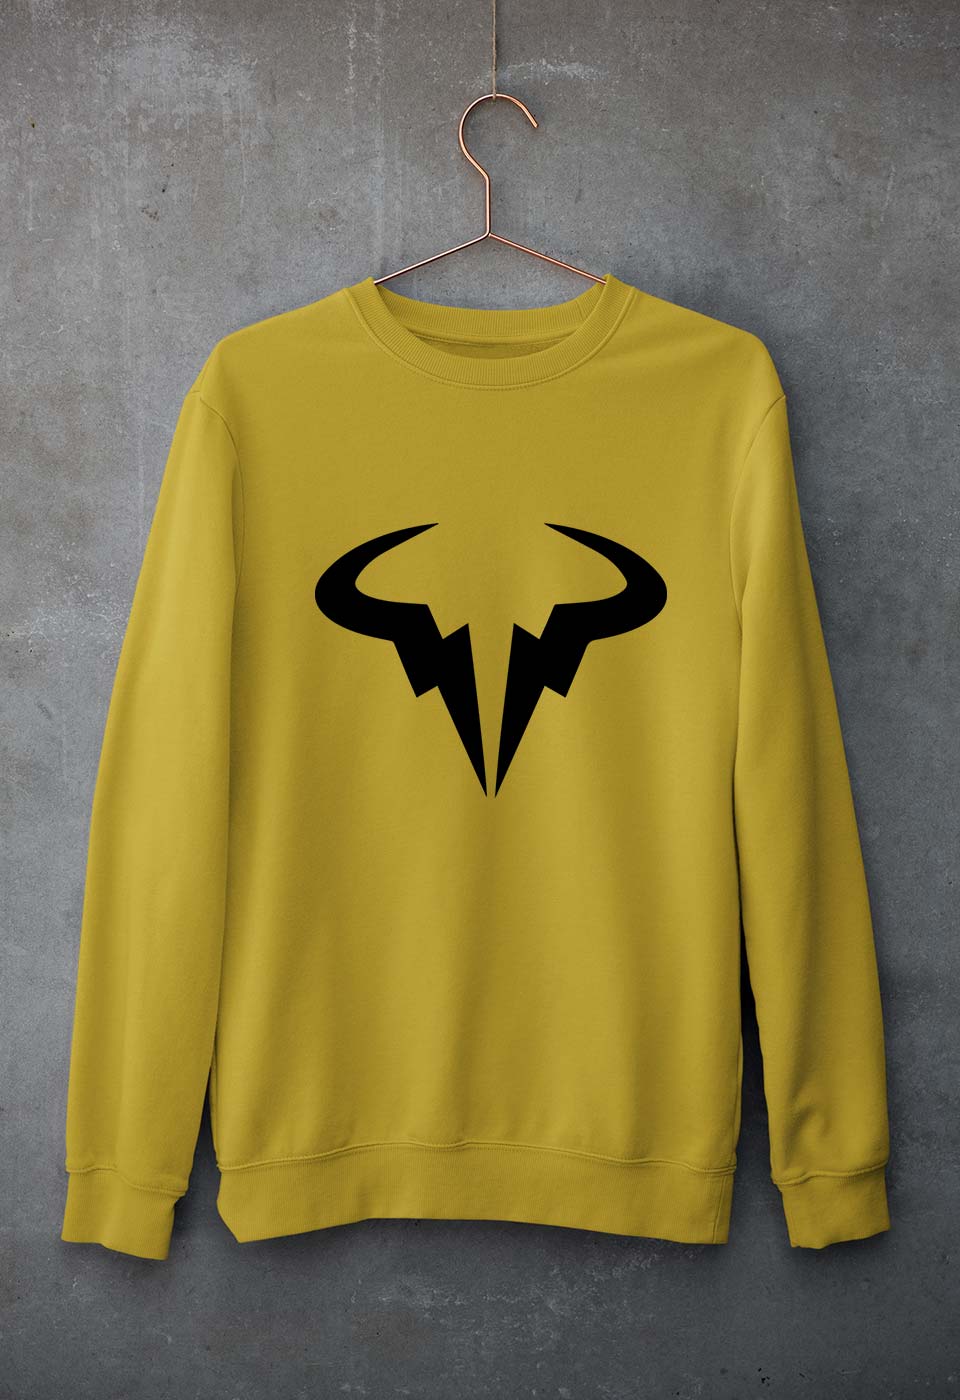 Rafael Nadal (RAFA) Unisex Sweatshirt for Men/Women-S(40 Inches)-Mustard Yellow-Ektarfa.online